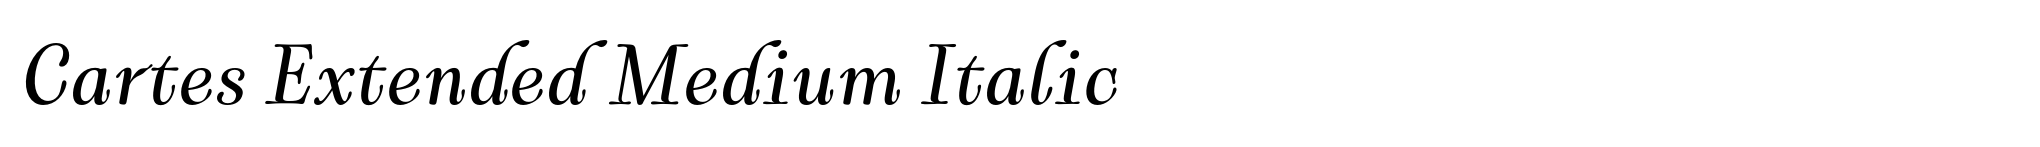 Cartes Extended Medium Italic image